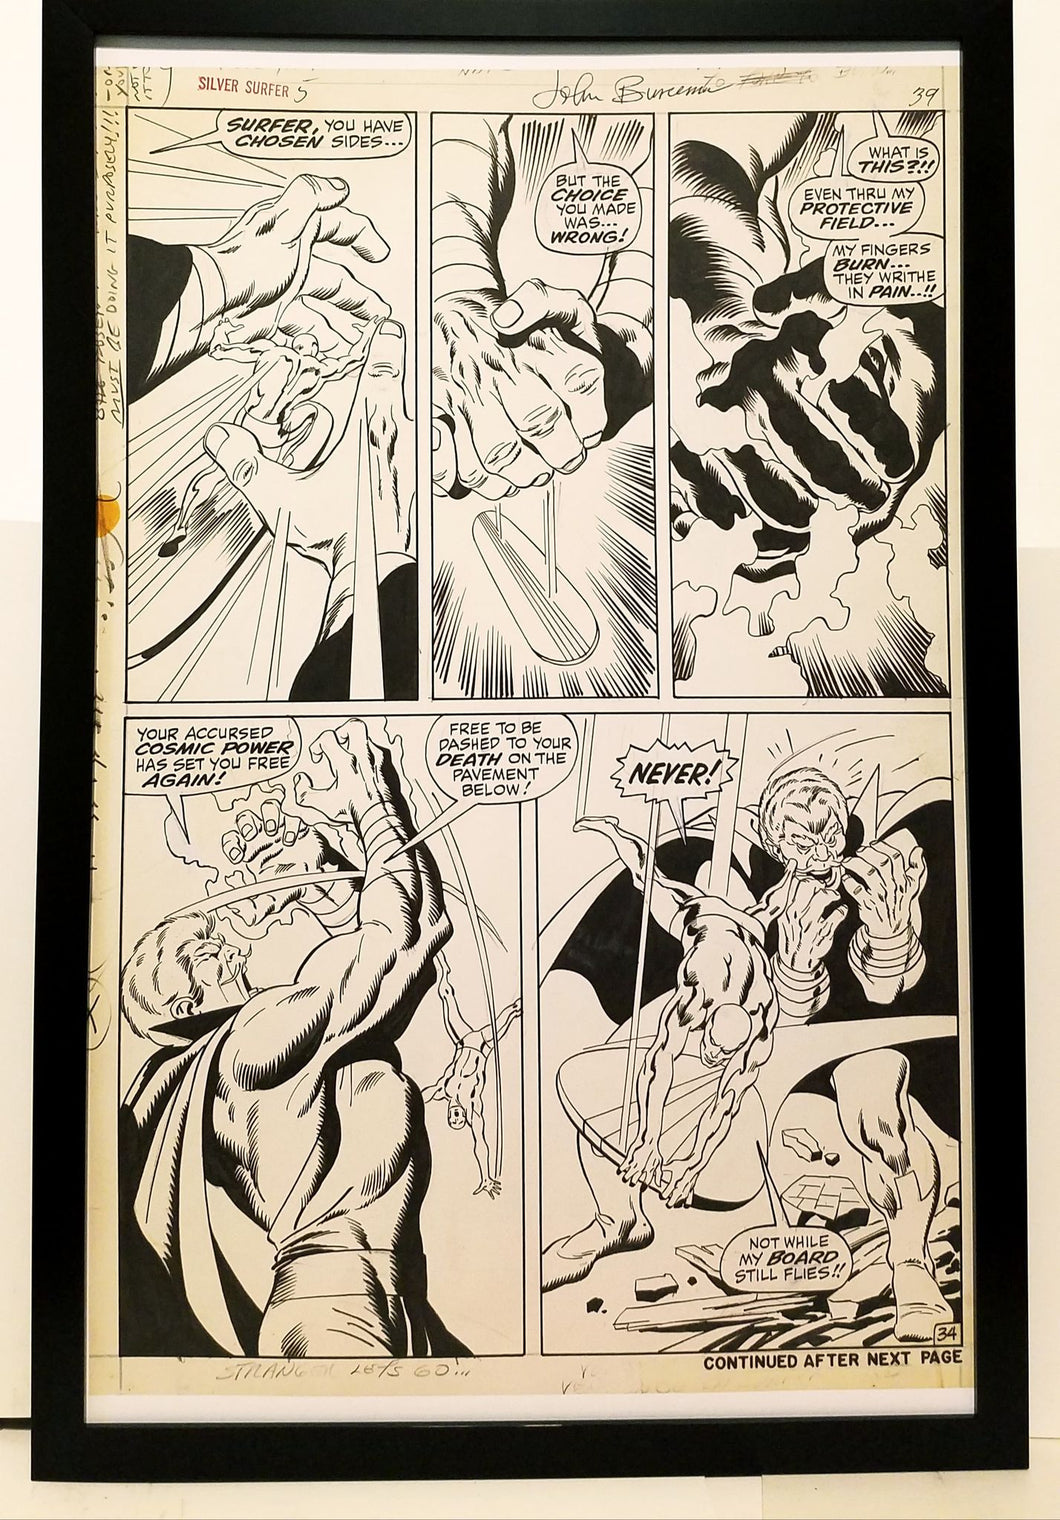 Silver Surfer #5 pg. 34 by John & Sal Buscema 11x17 FRAMED Original Art Poster Marvel Comics